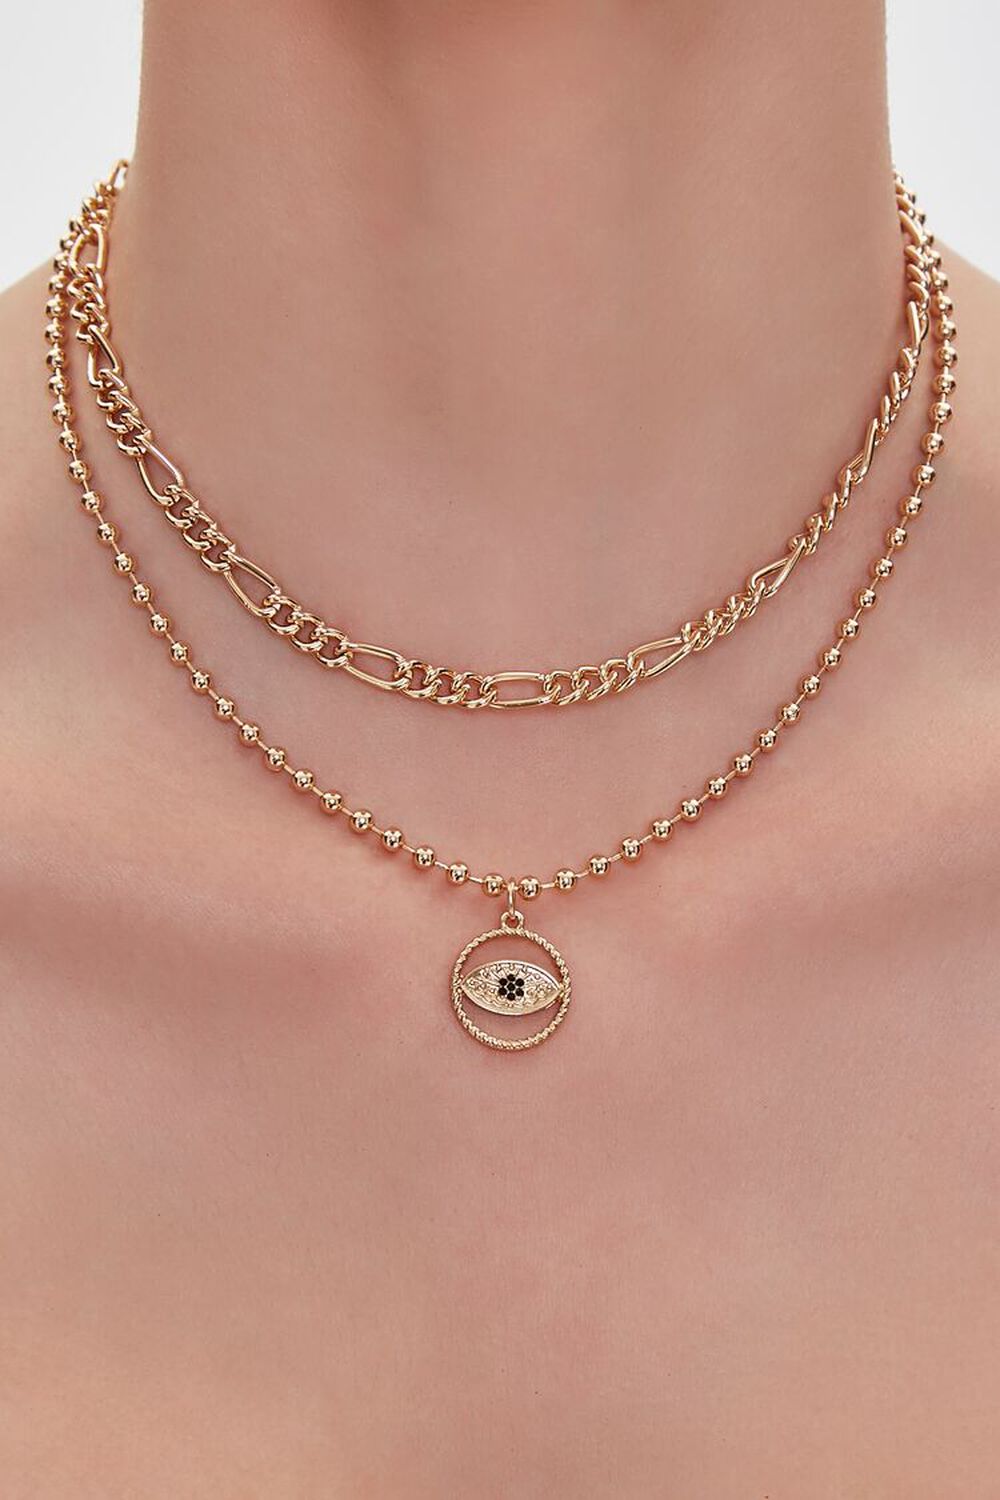 GOLD Eye Charm Layered Necklace, image 1